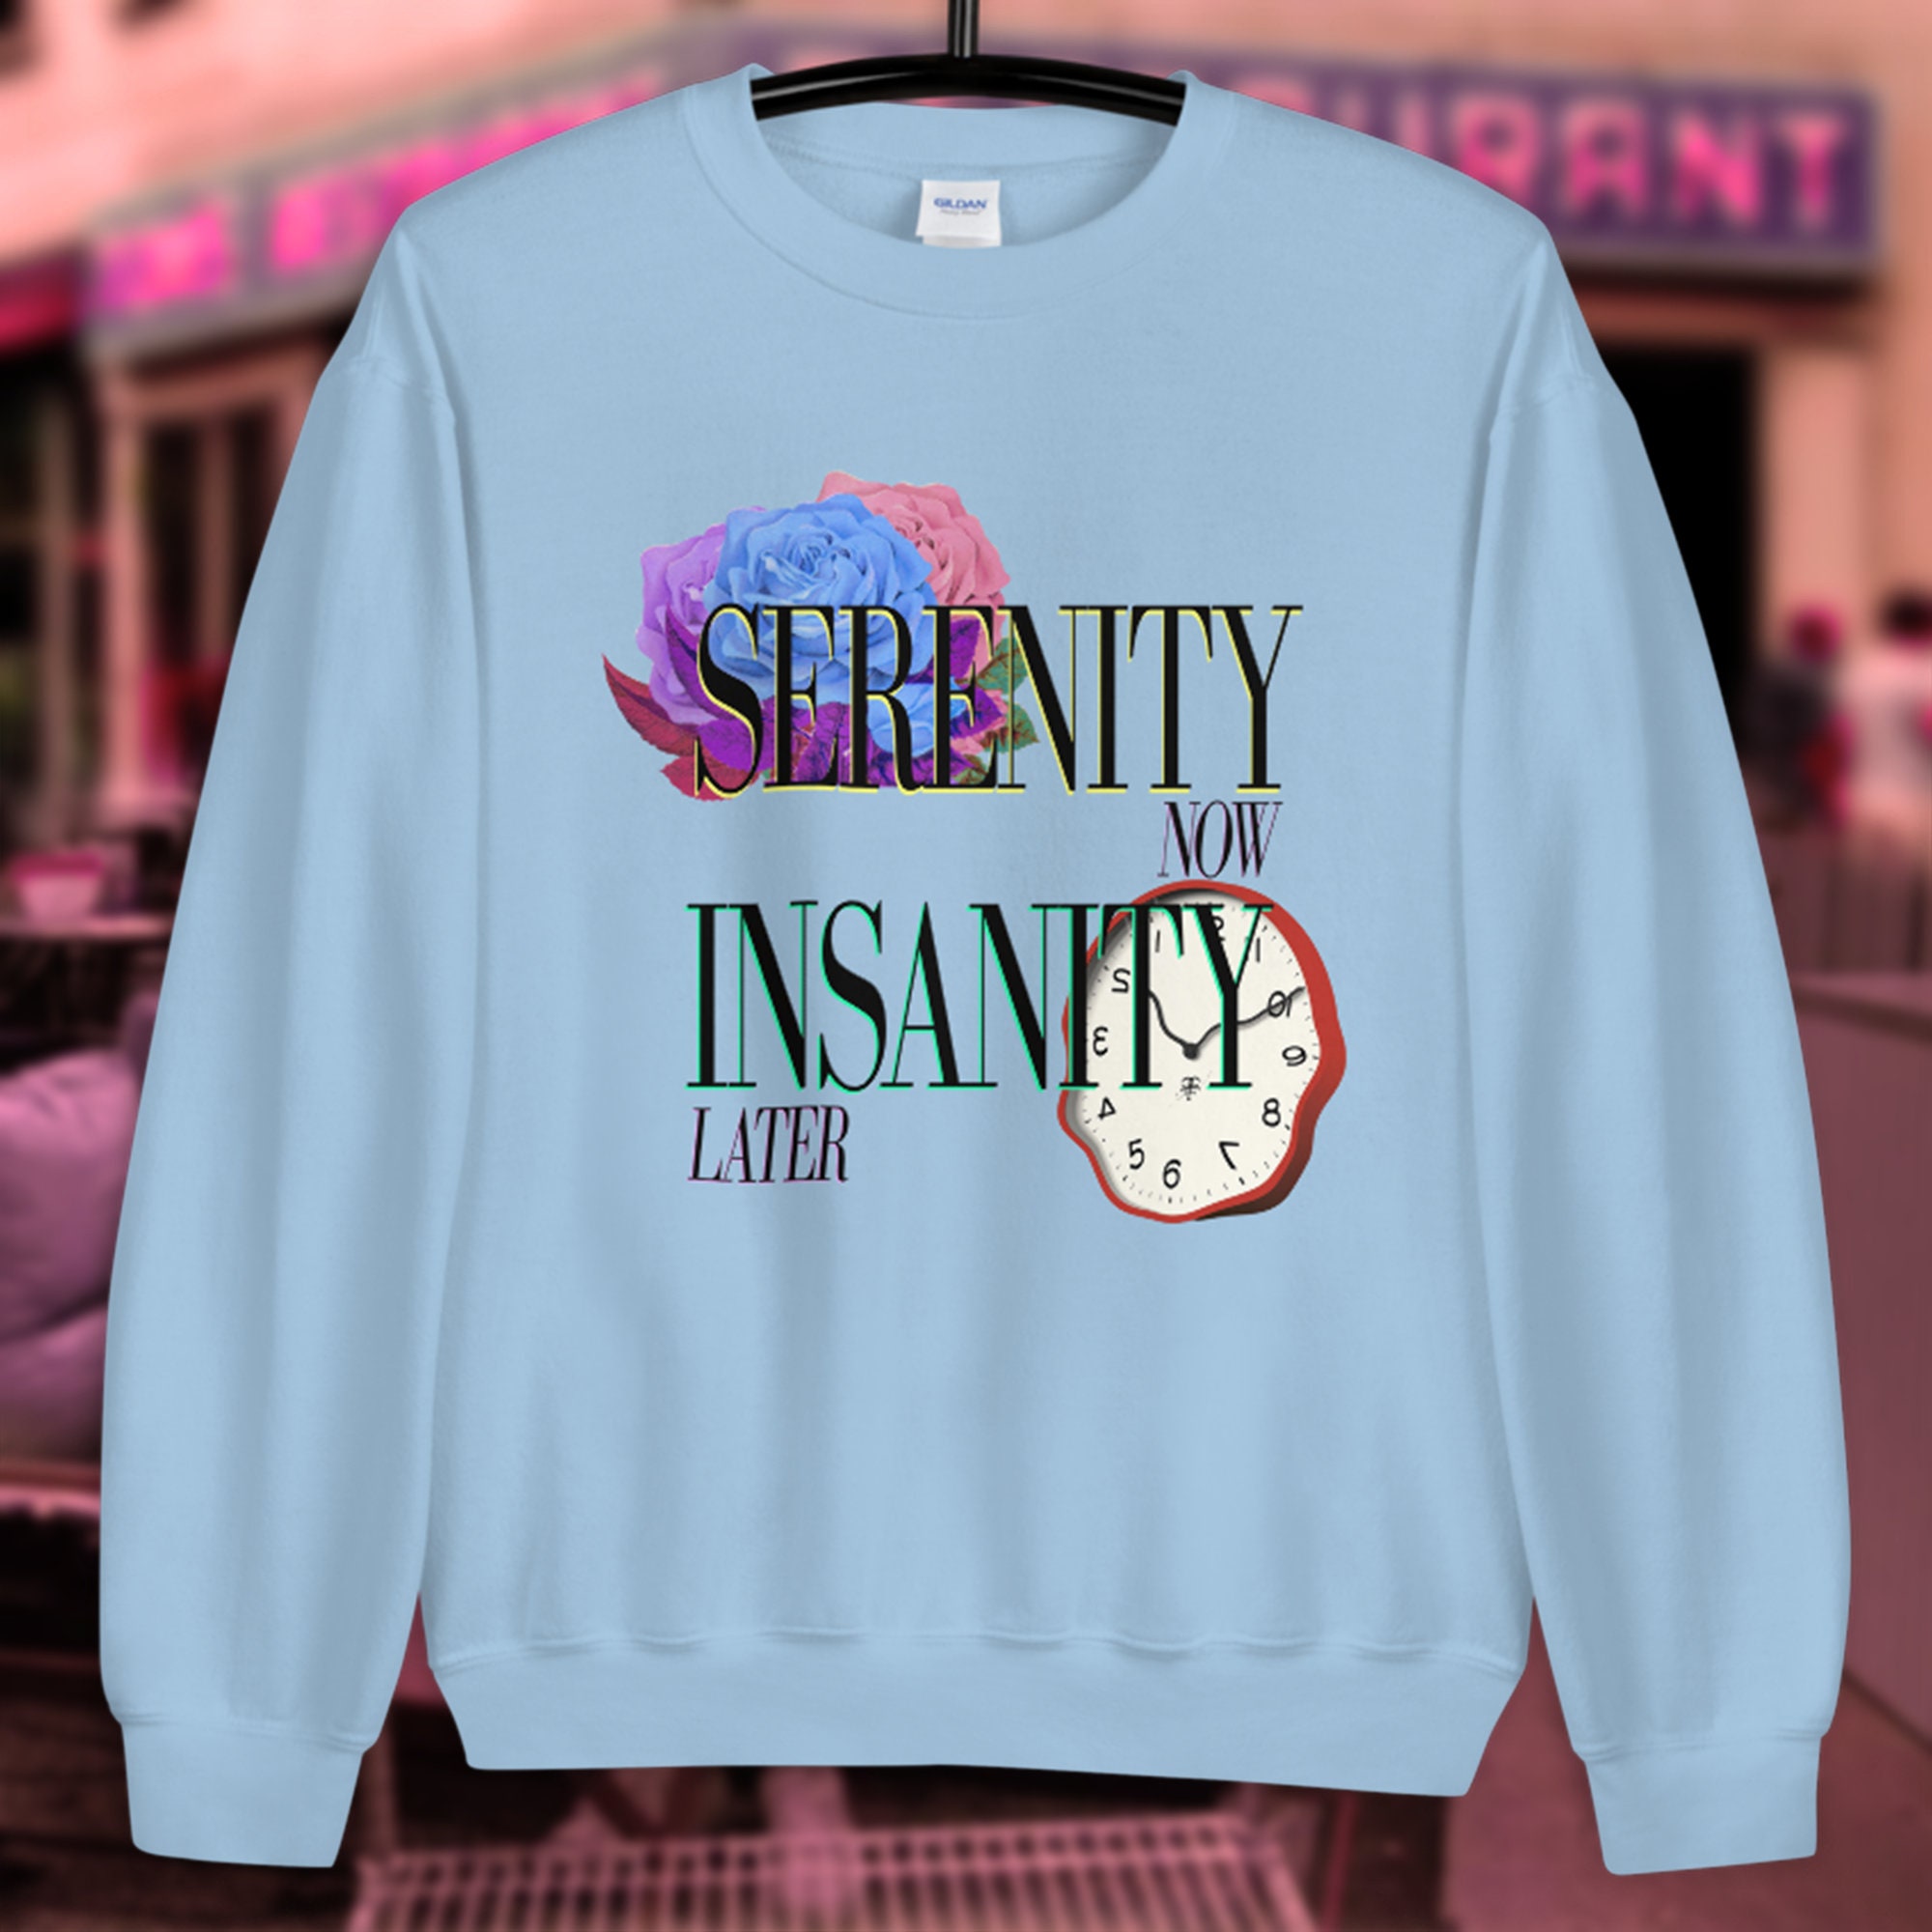 Serenity Blue Long Sleeve Sweater